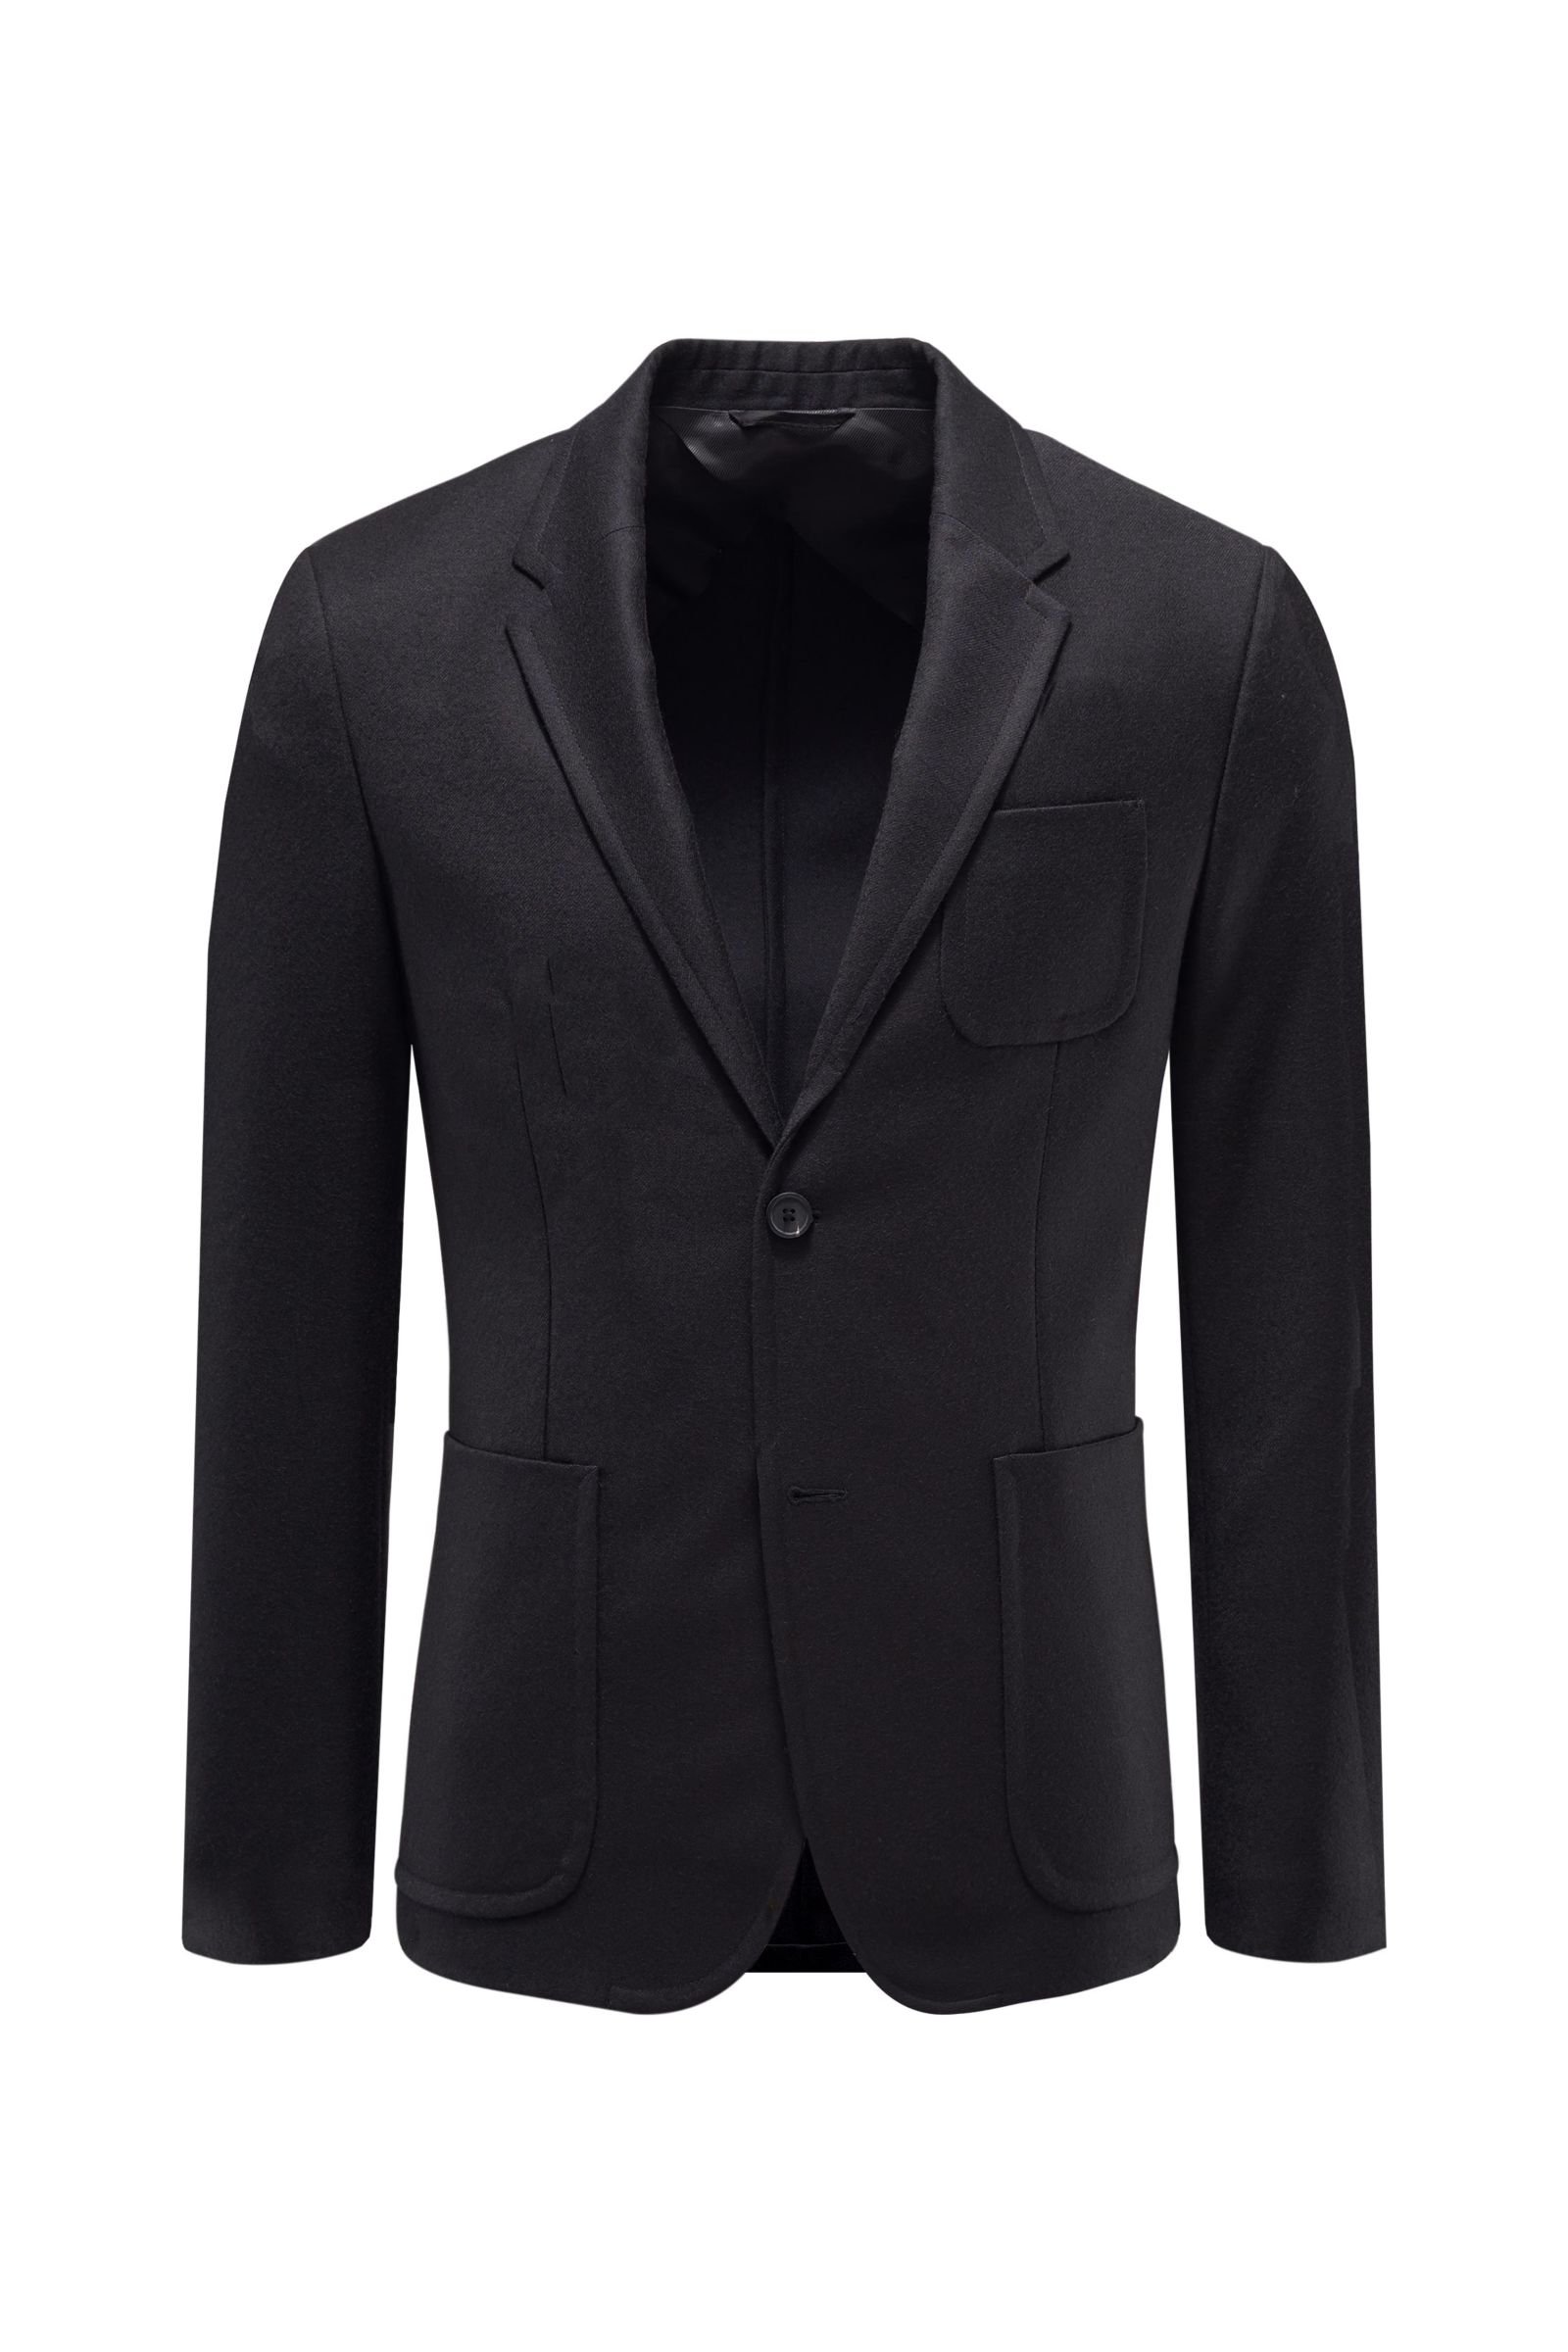 Smart-casual jacket 'Seaton', black